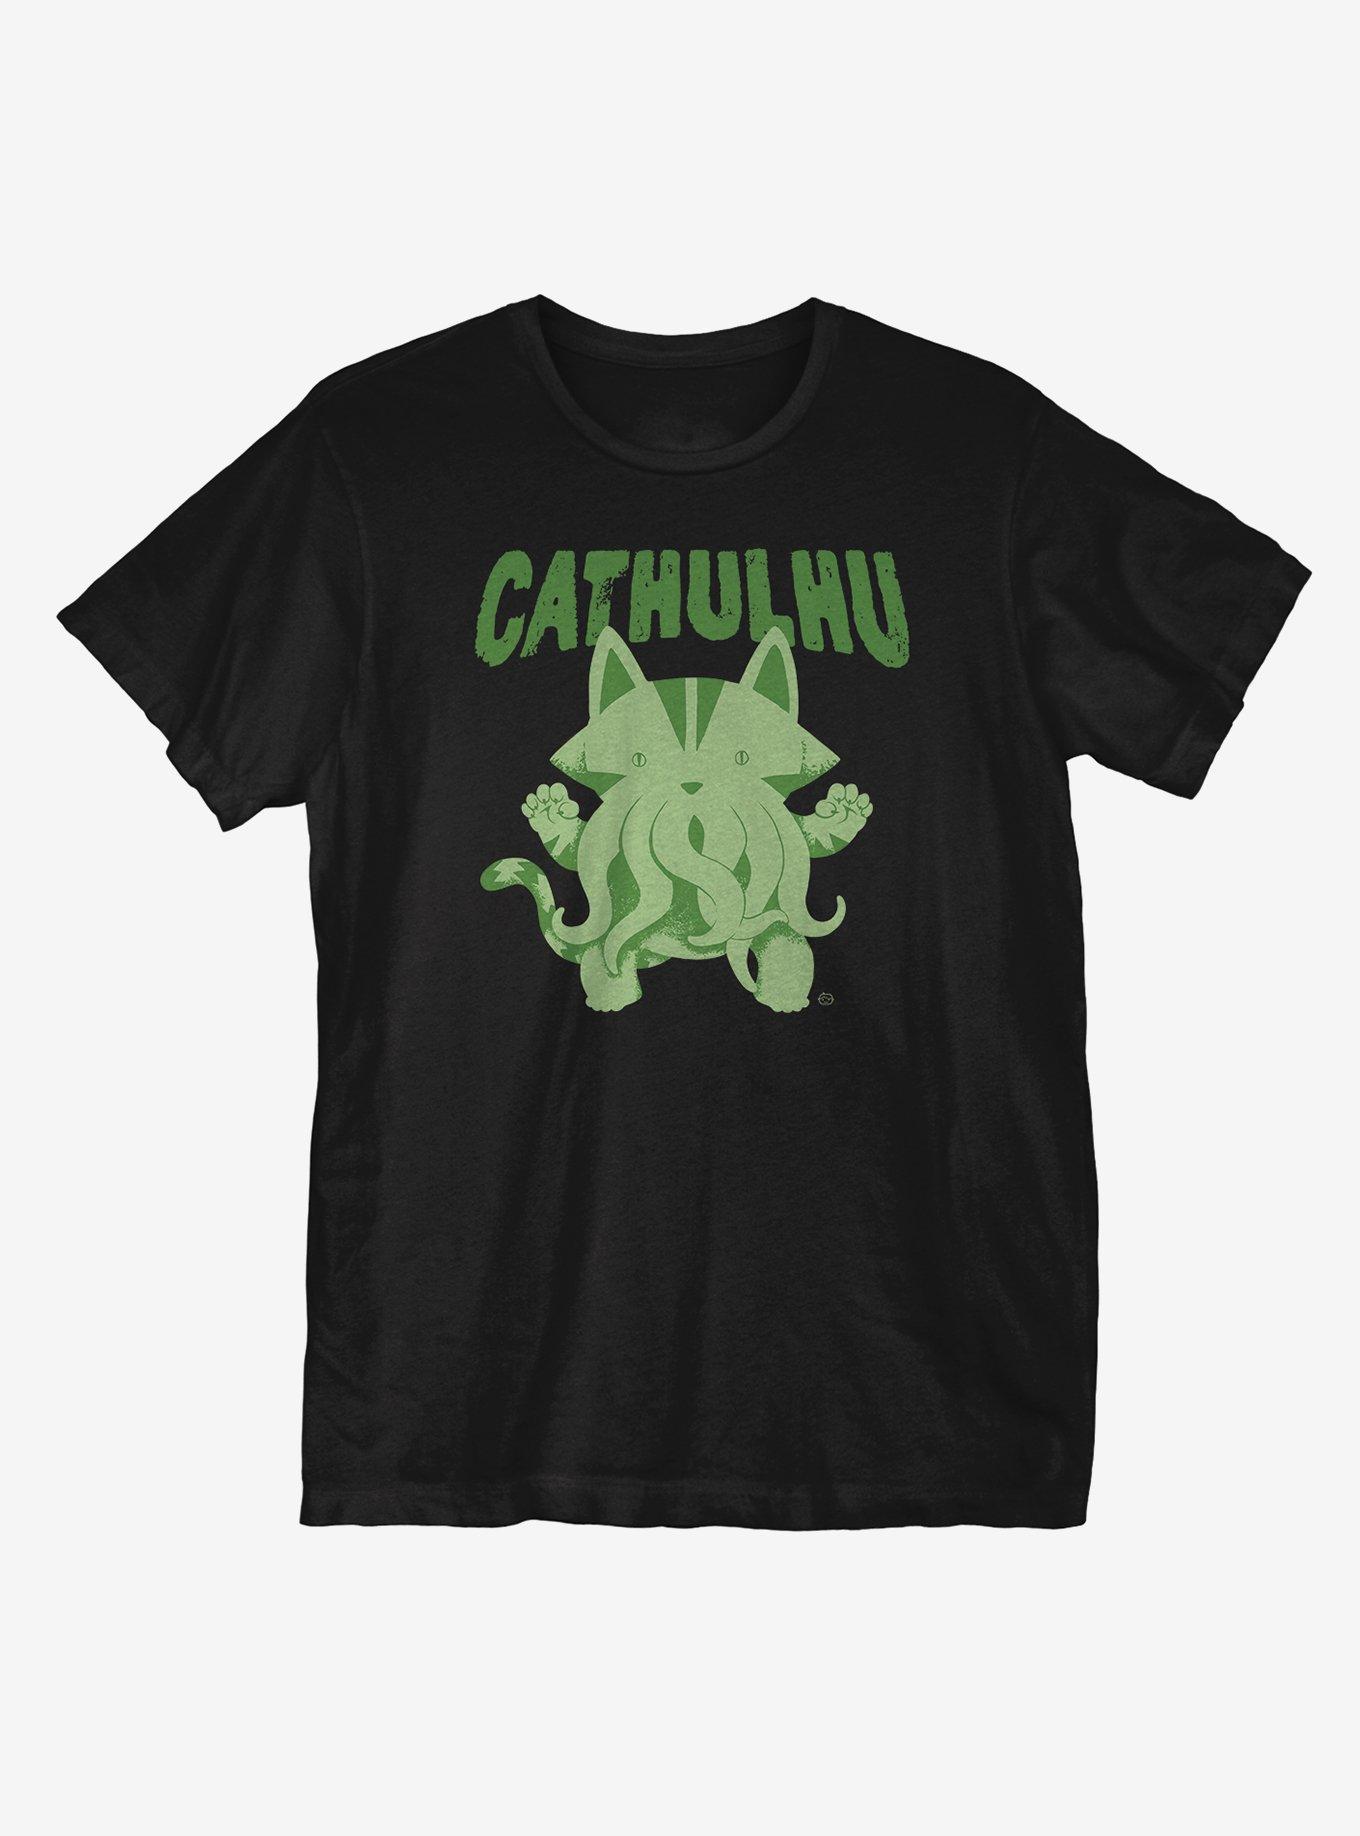 Cathulhu T-Shirt, BLACK, hi-res